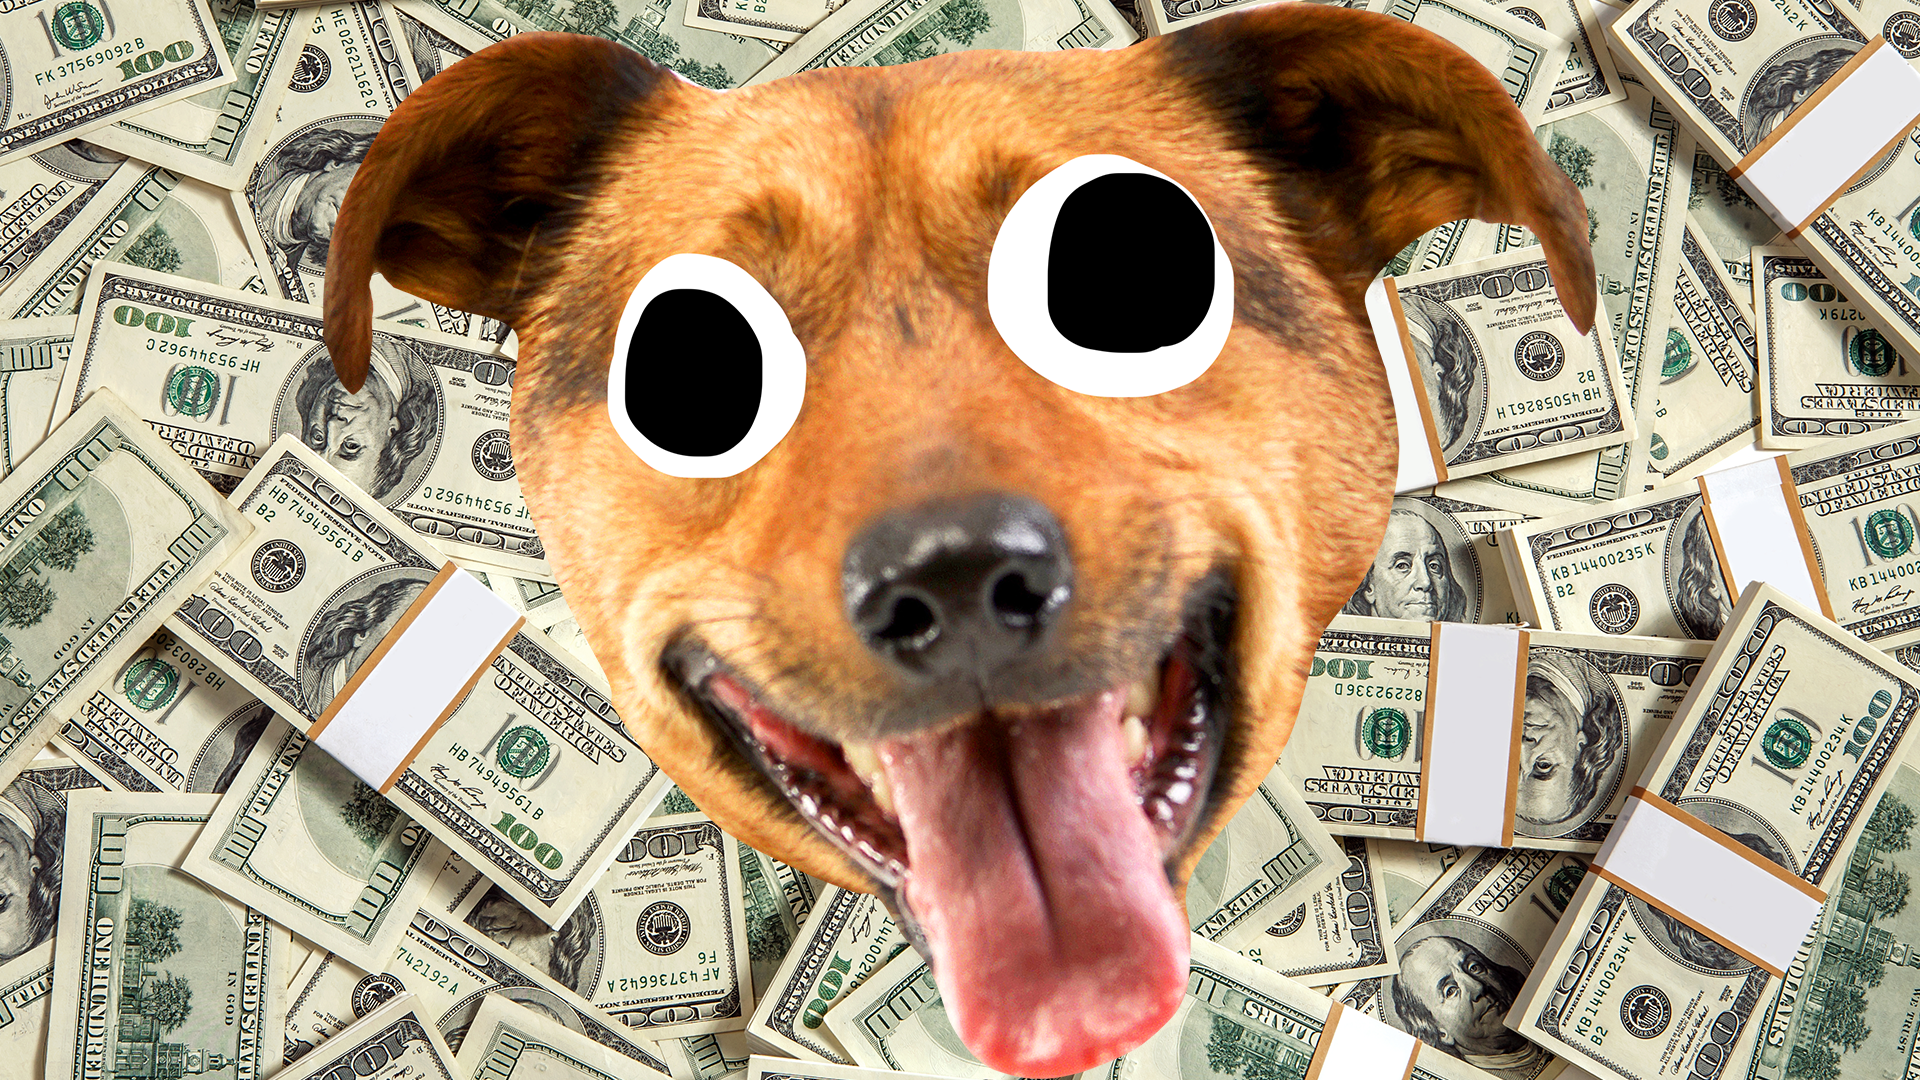 Derpy dog face on money background